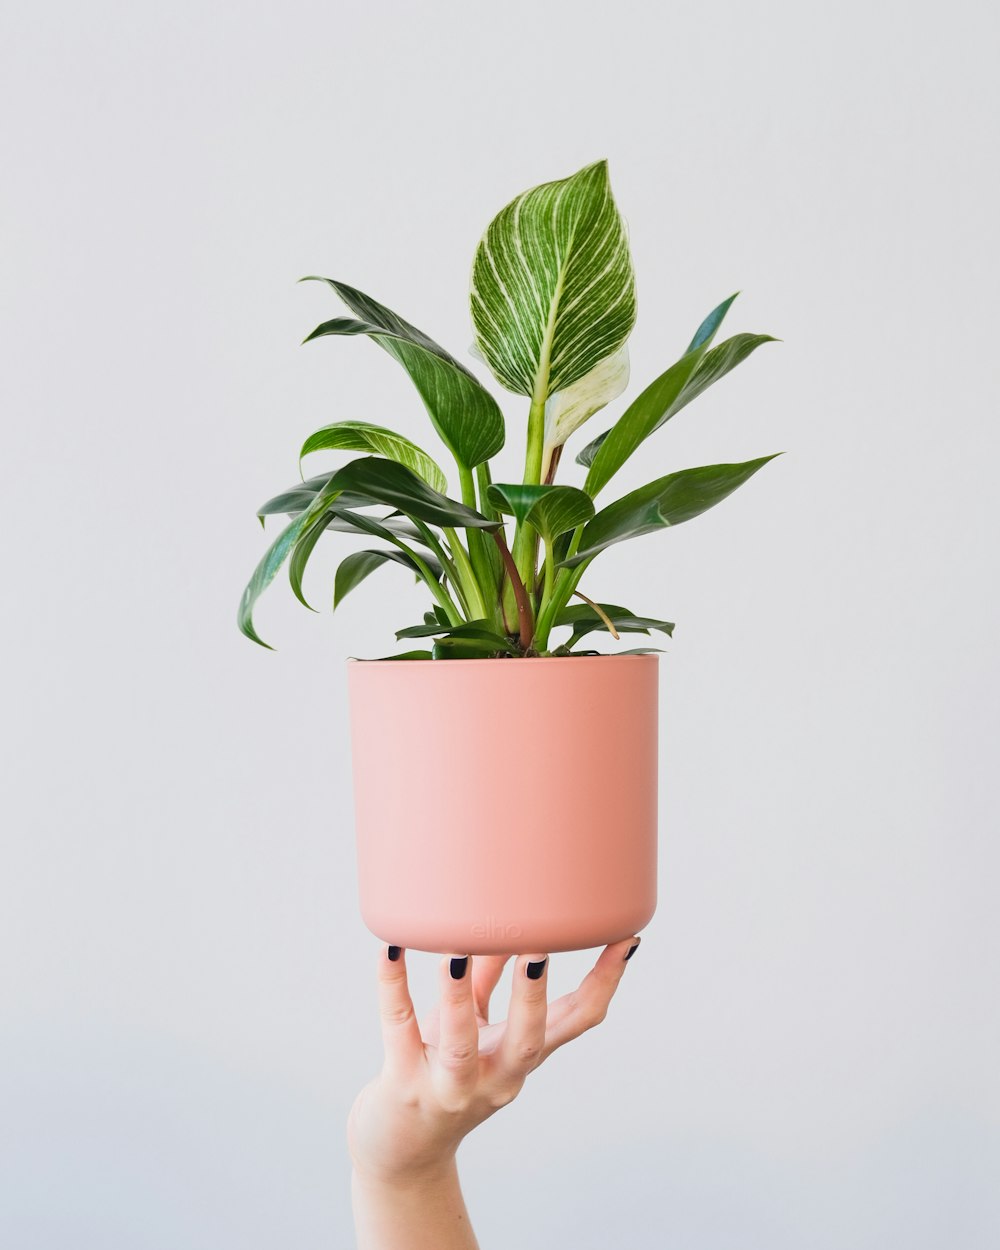 una persona che tiene una pianta in un vaso rosa